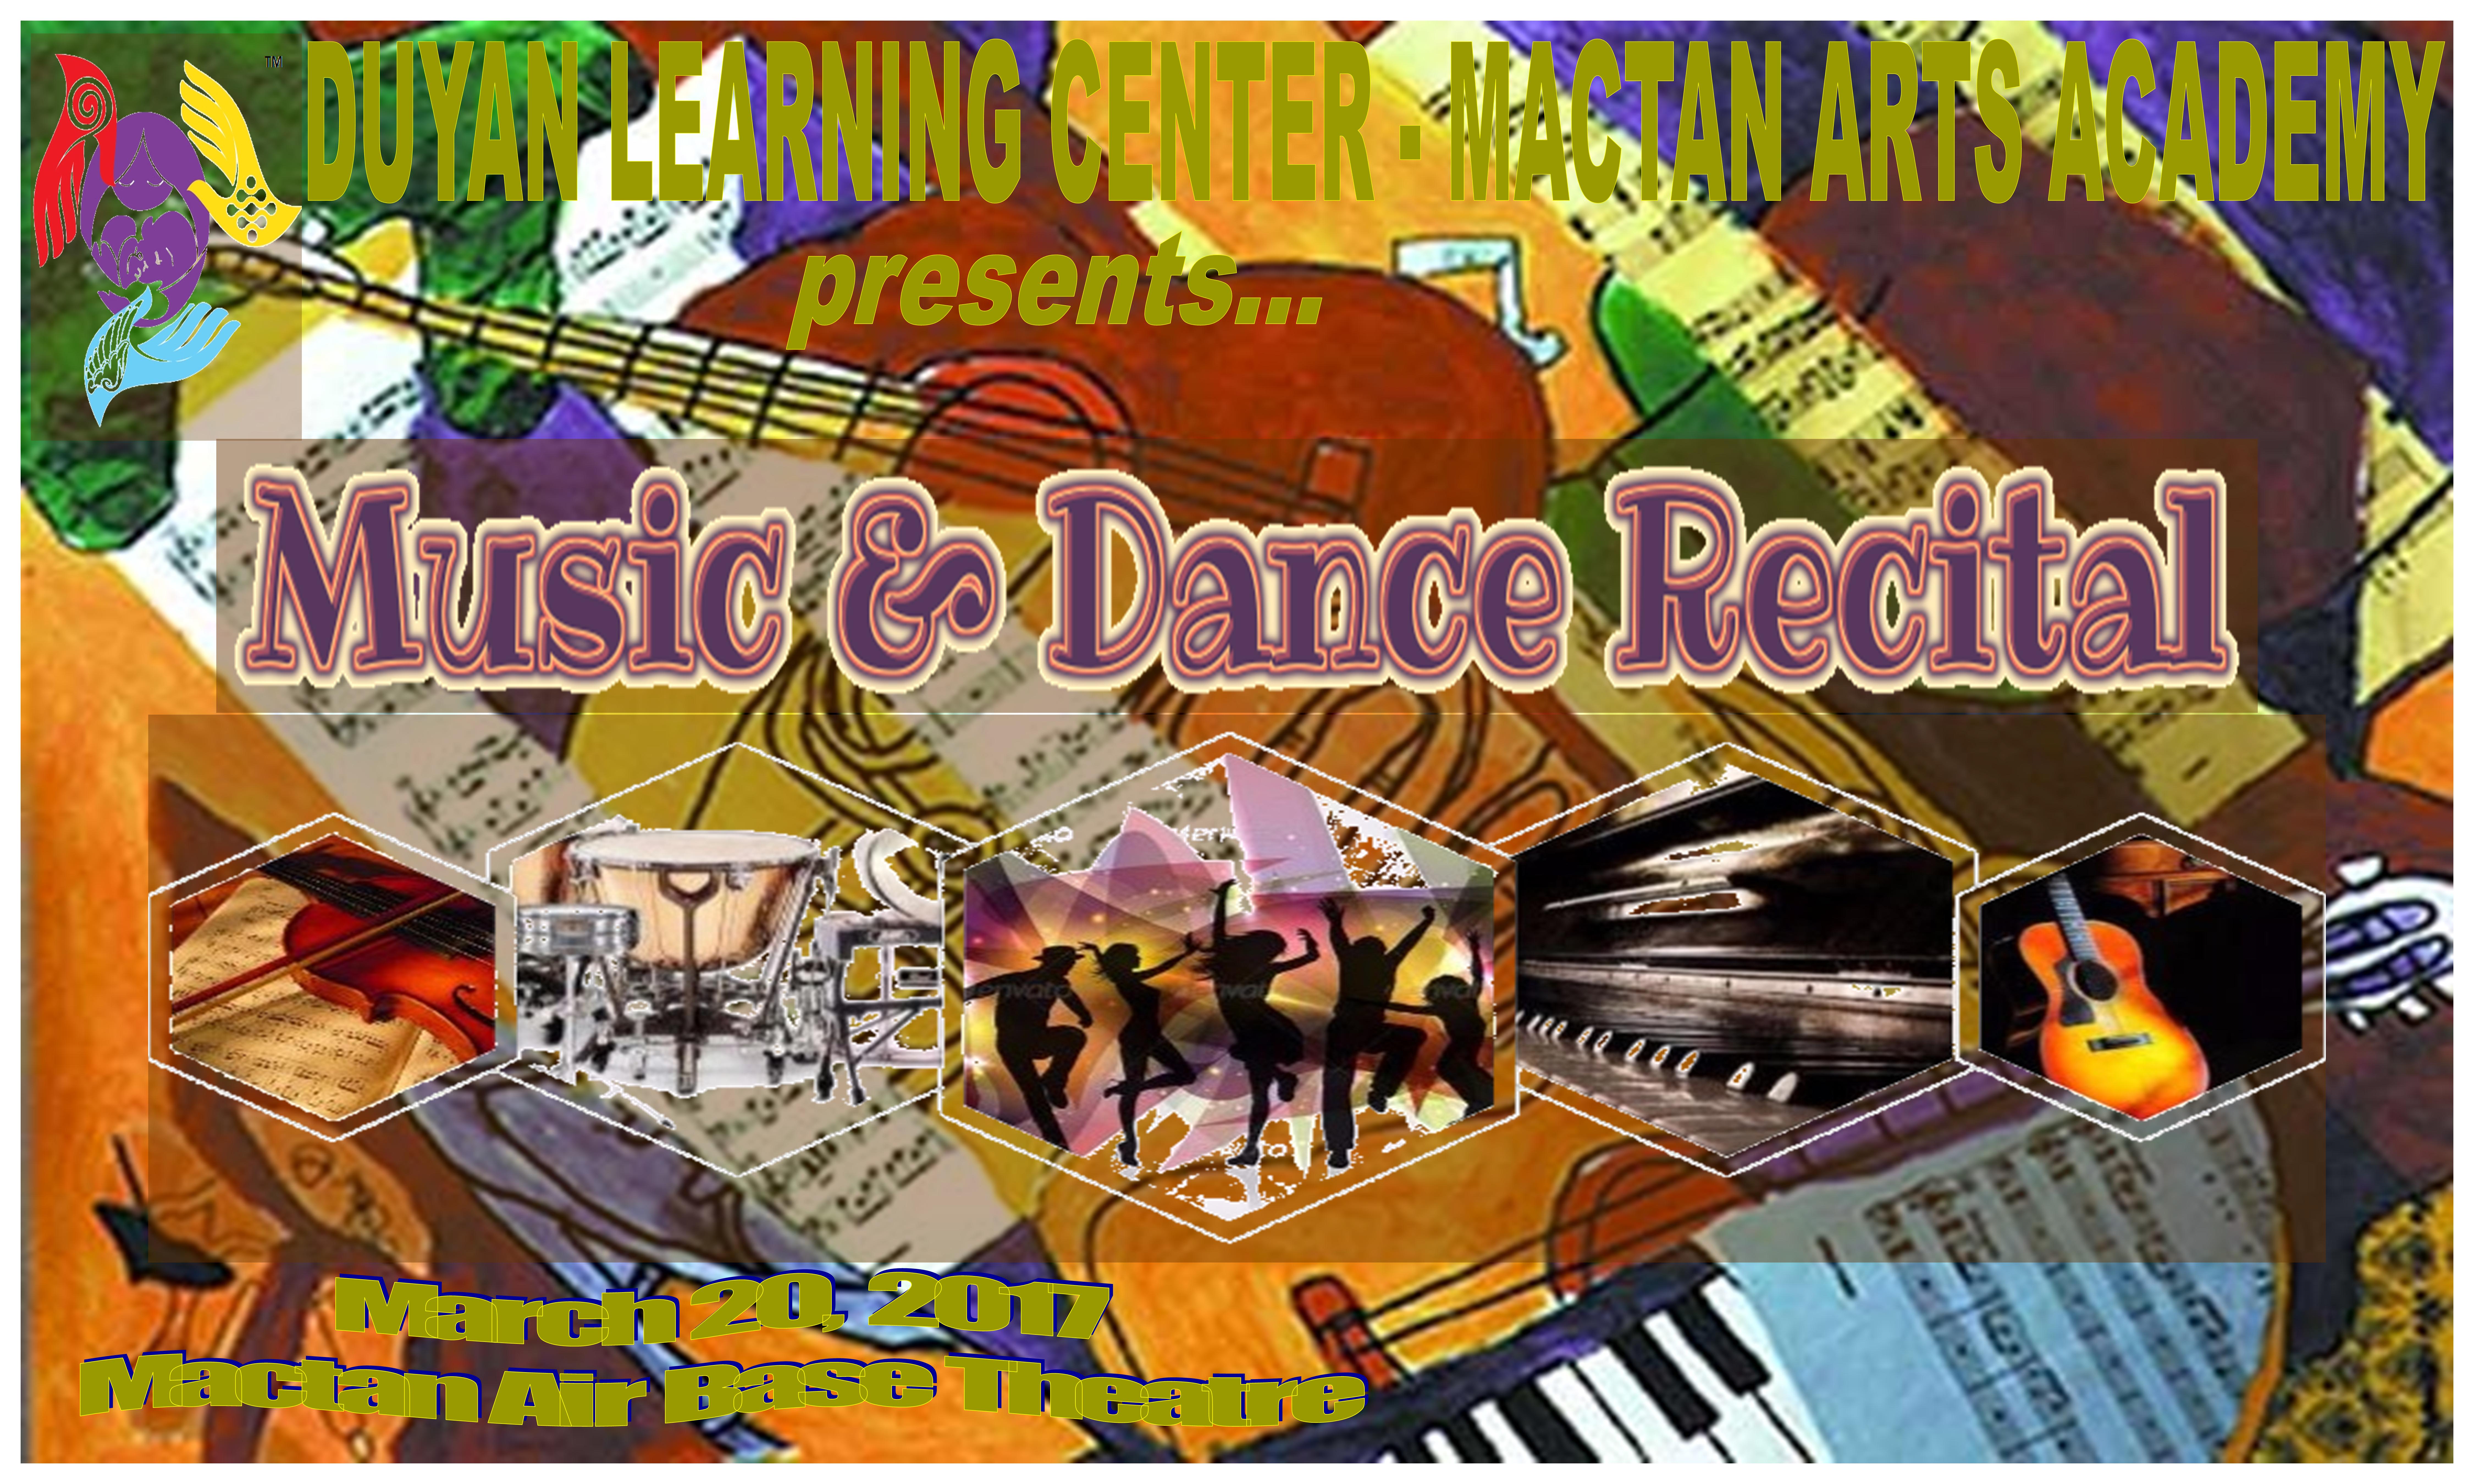 Music & Dance Club Recital 2017